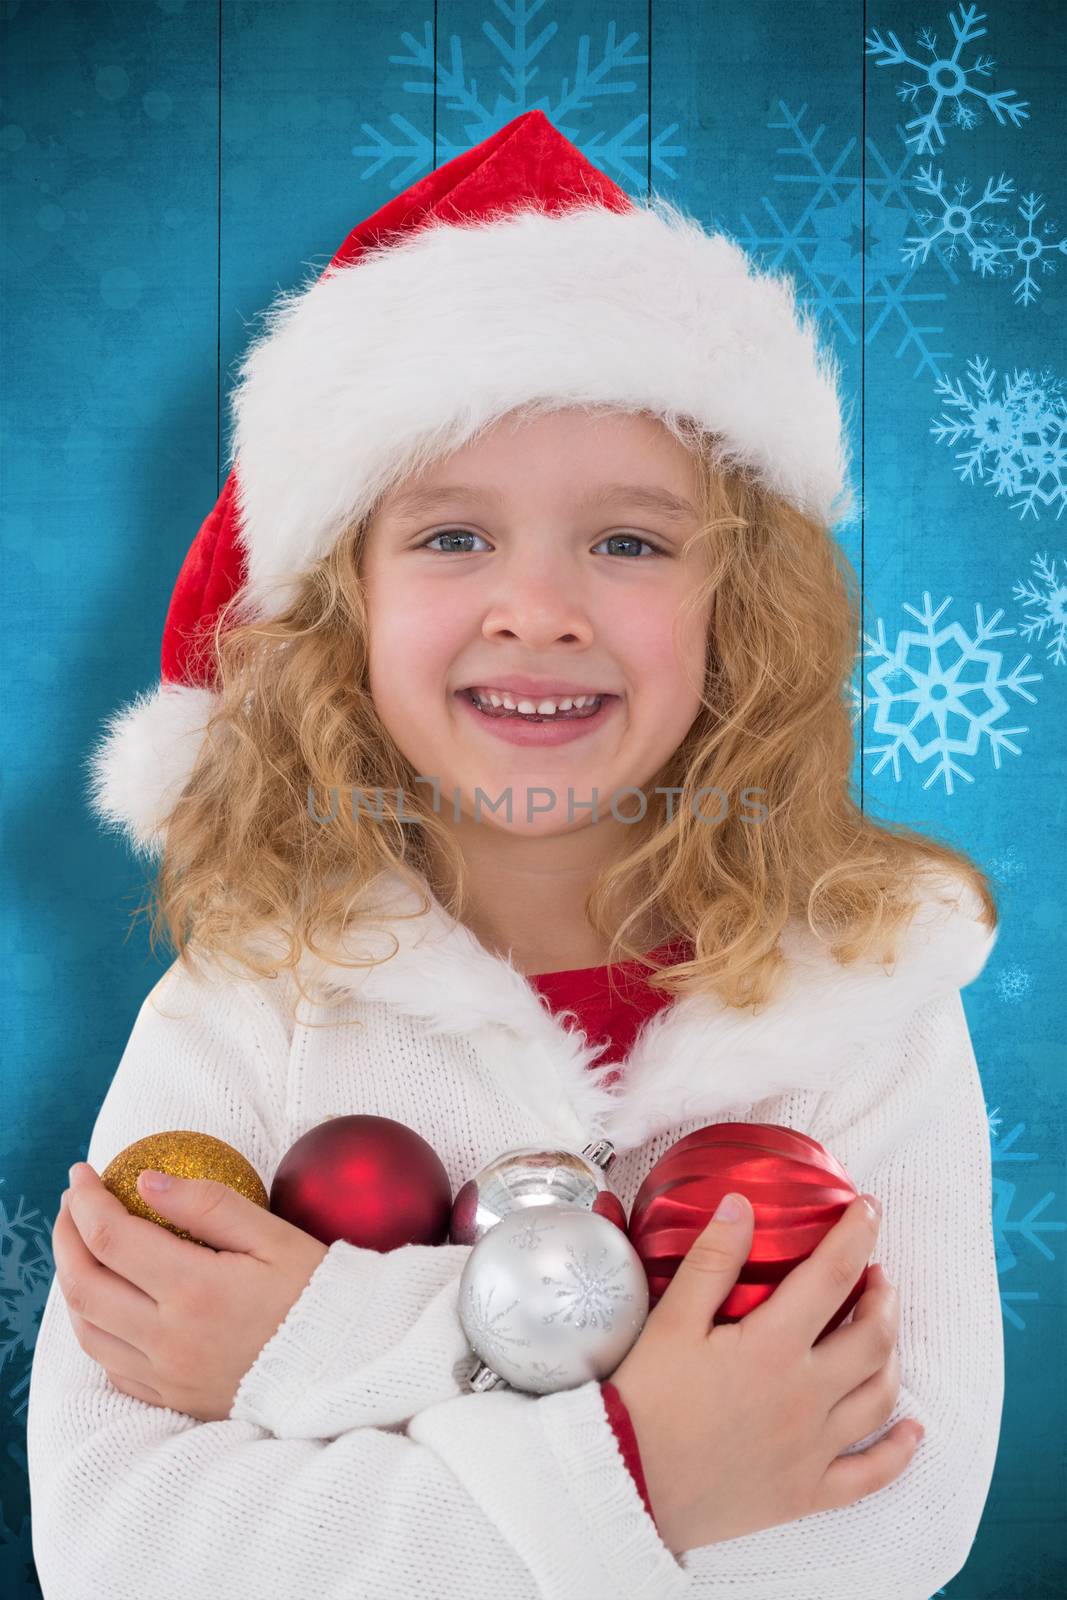 Festive little girl smiling at camera against snowflake pattern on blue planks